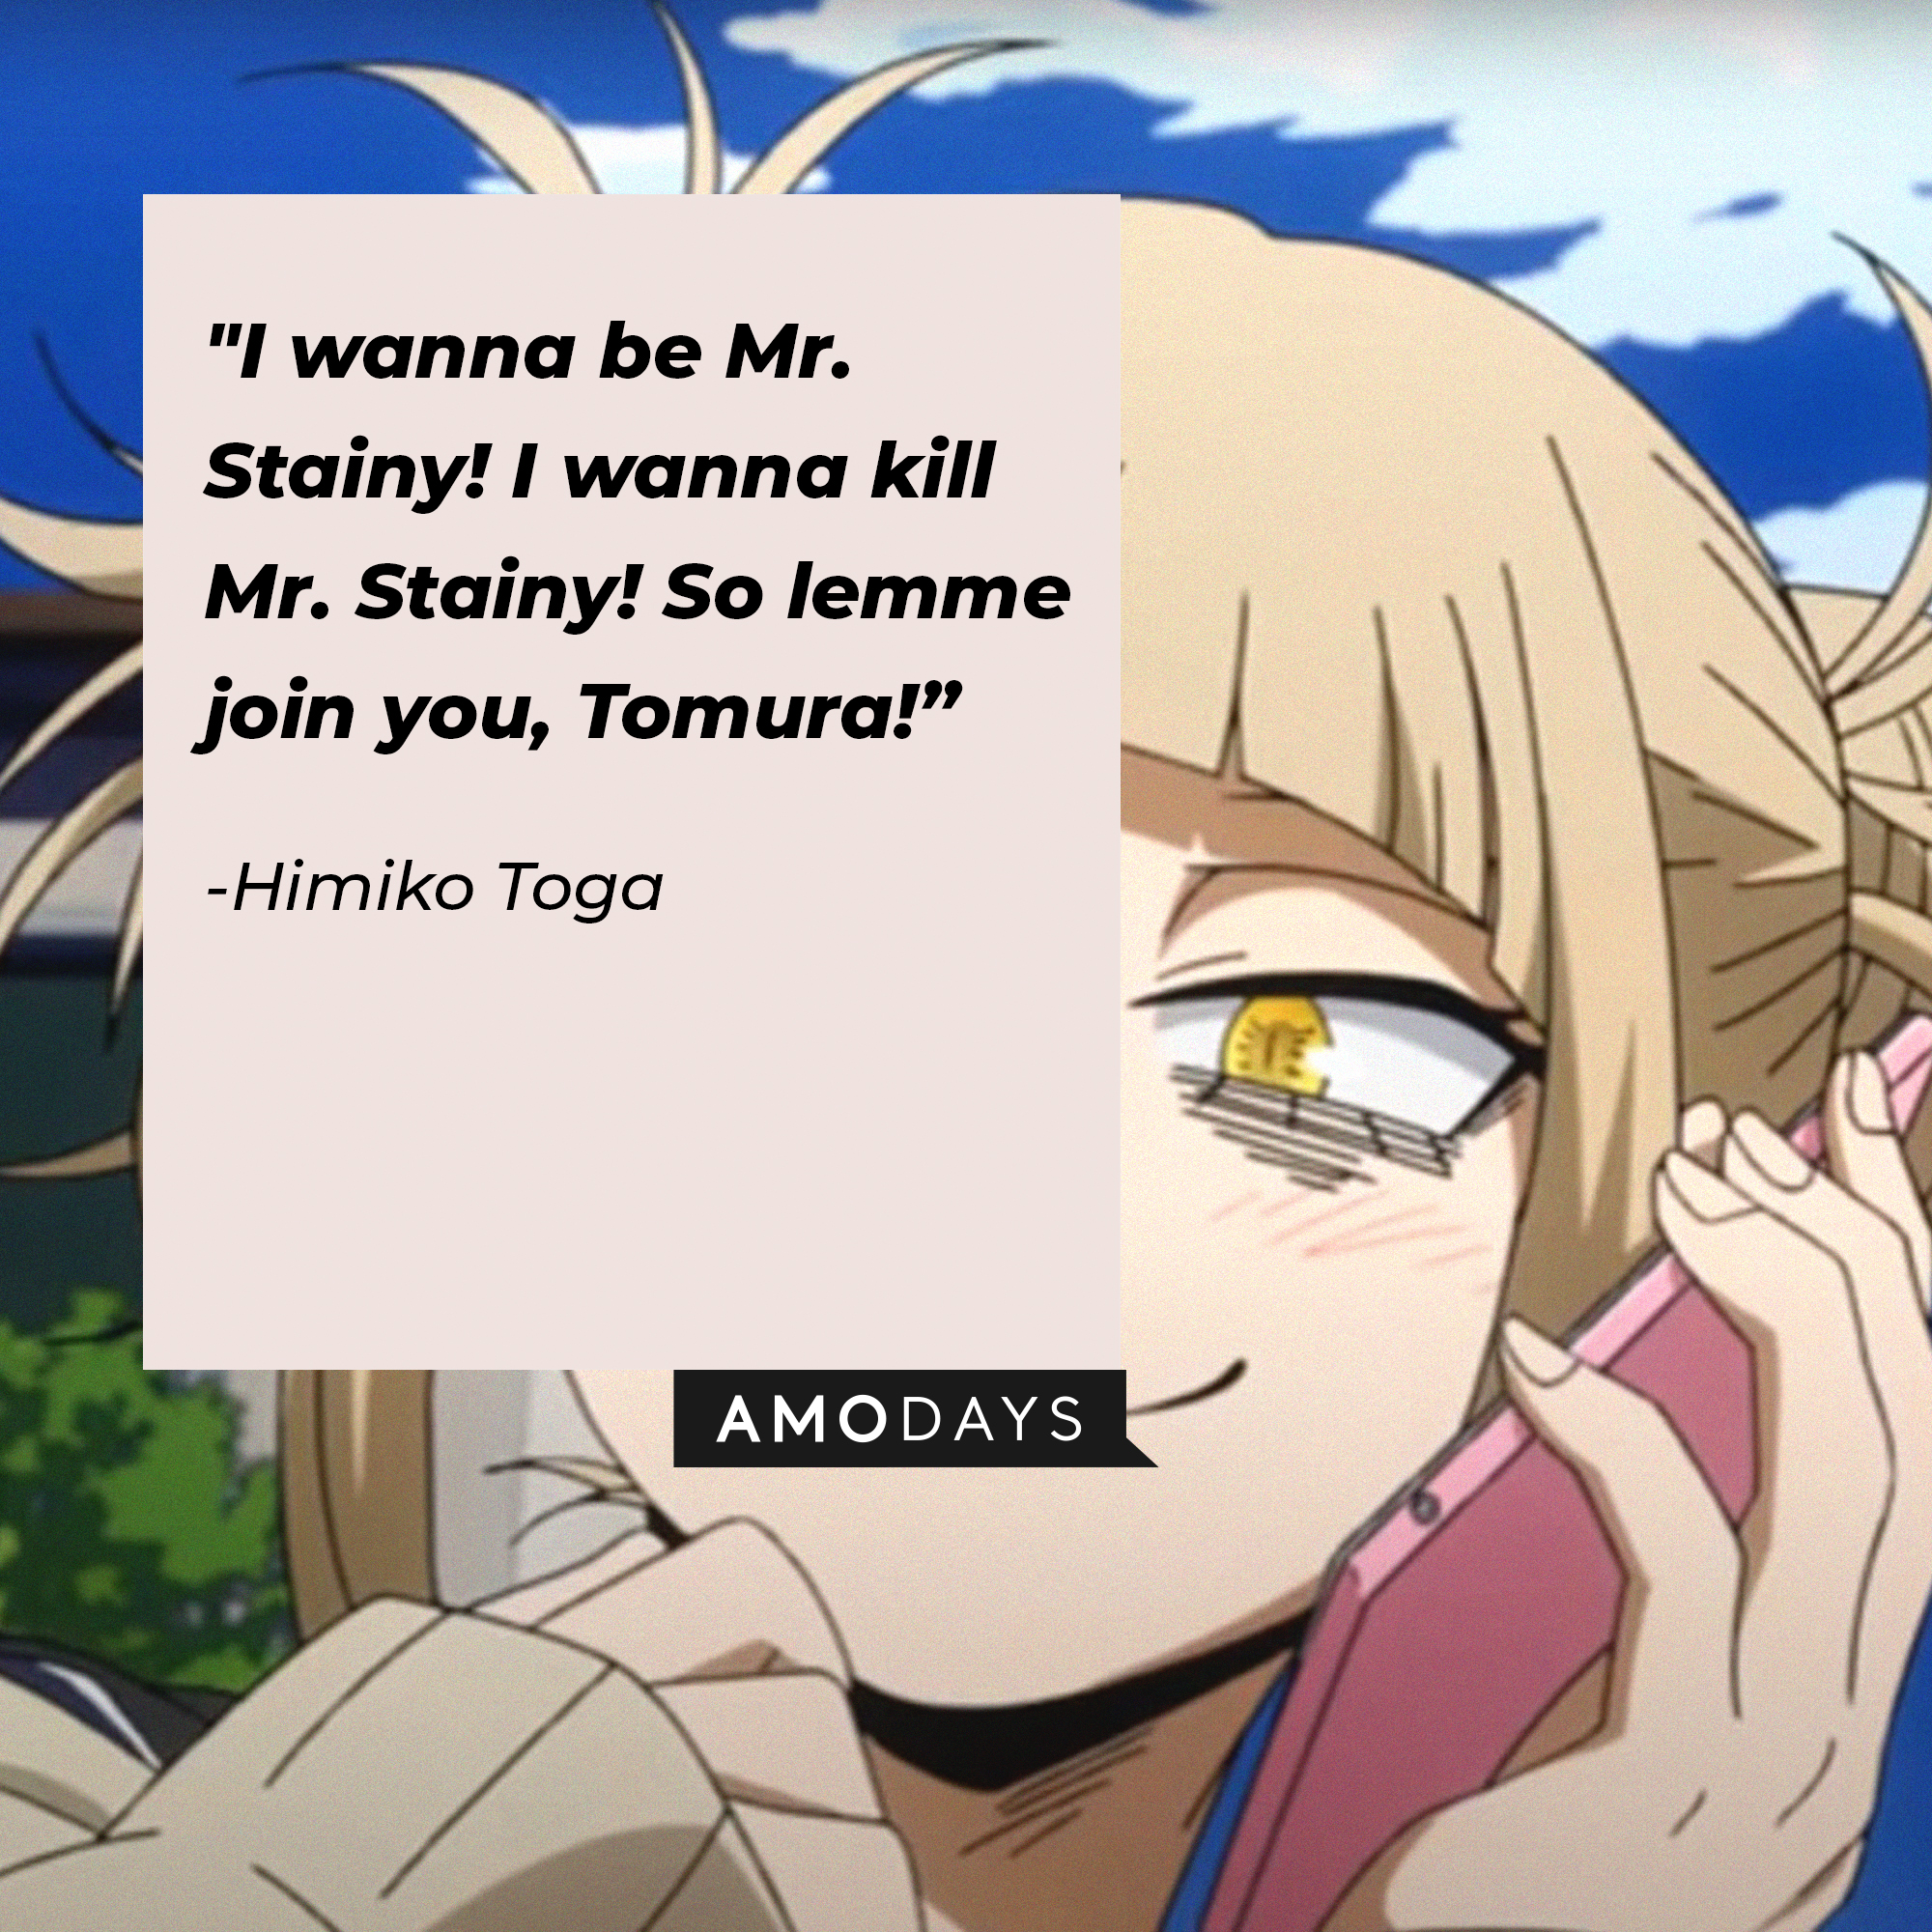 Himiko Toga’s quote: "I wanna be Mr. Stainy! I wanna kill Mr. Stainy! So lemme join you, Tomura!” | Image: AmoDays